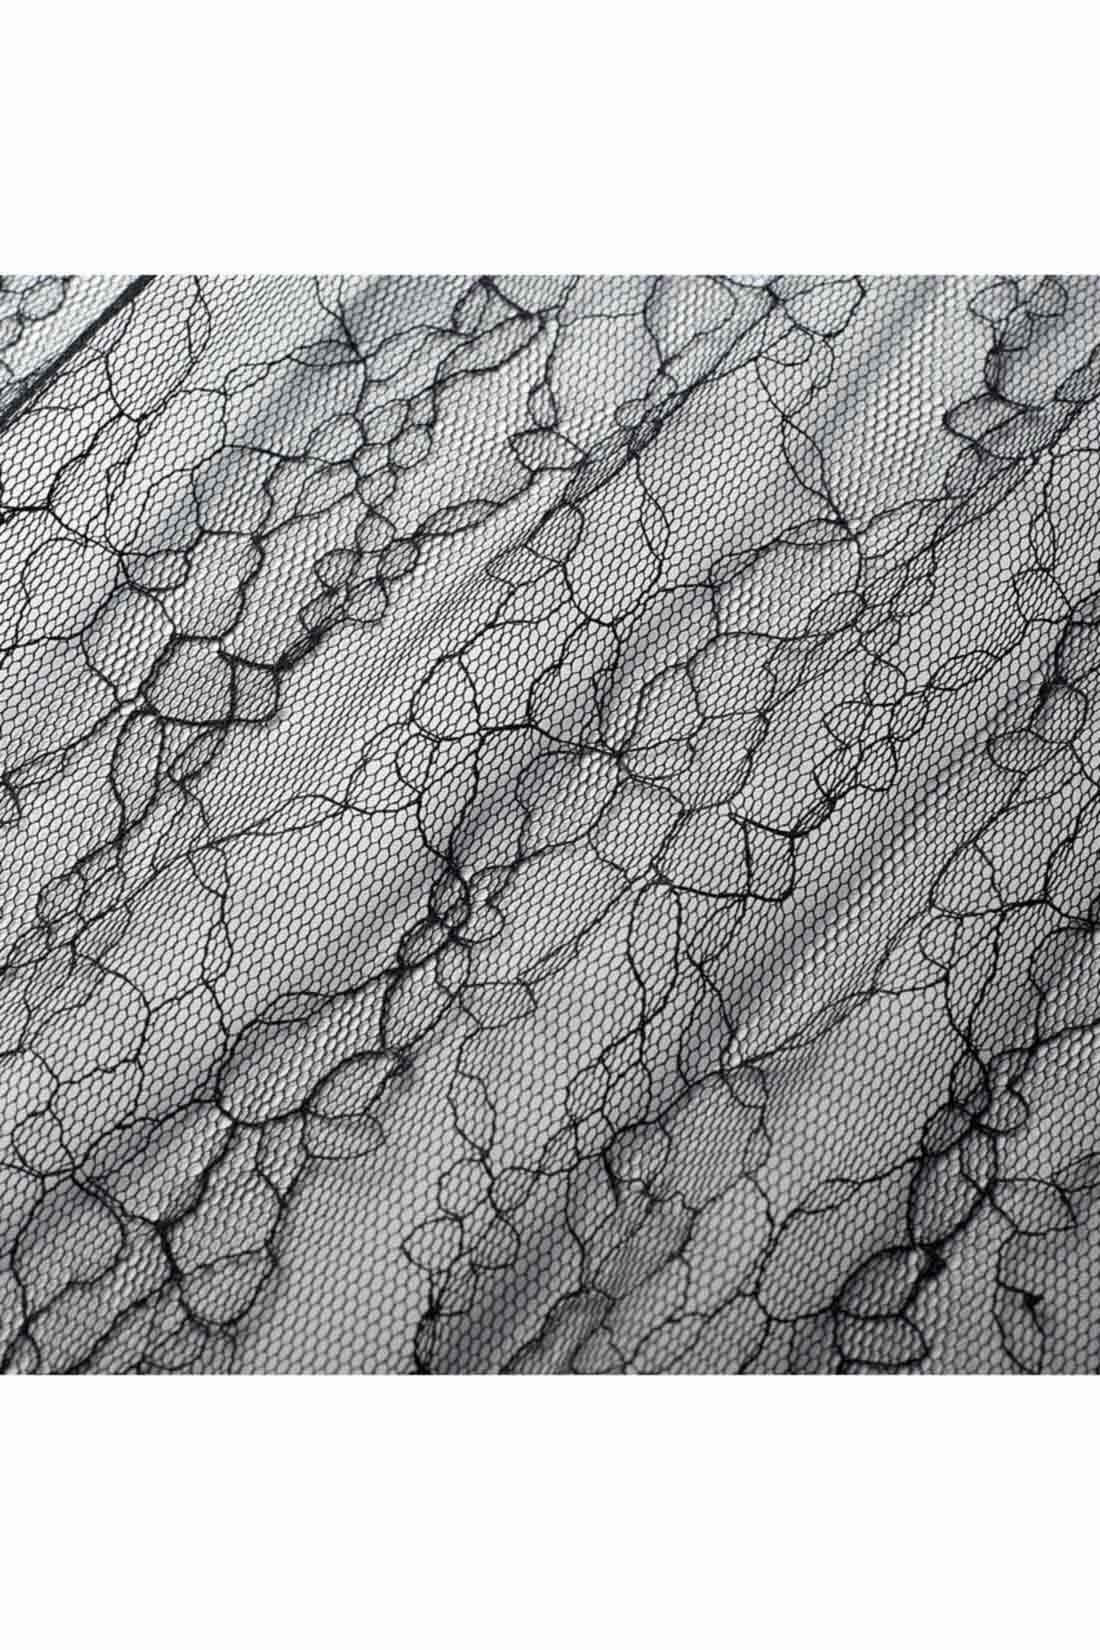 IEDIT|IEDIT[イディット]　コーデの幅が広がる チュールレーススカートセット〈ブラック〉|ふわりとエアリーでやわらかなチュールレース素材。透け感が上品な花モチーフ。